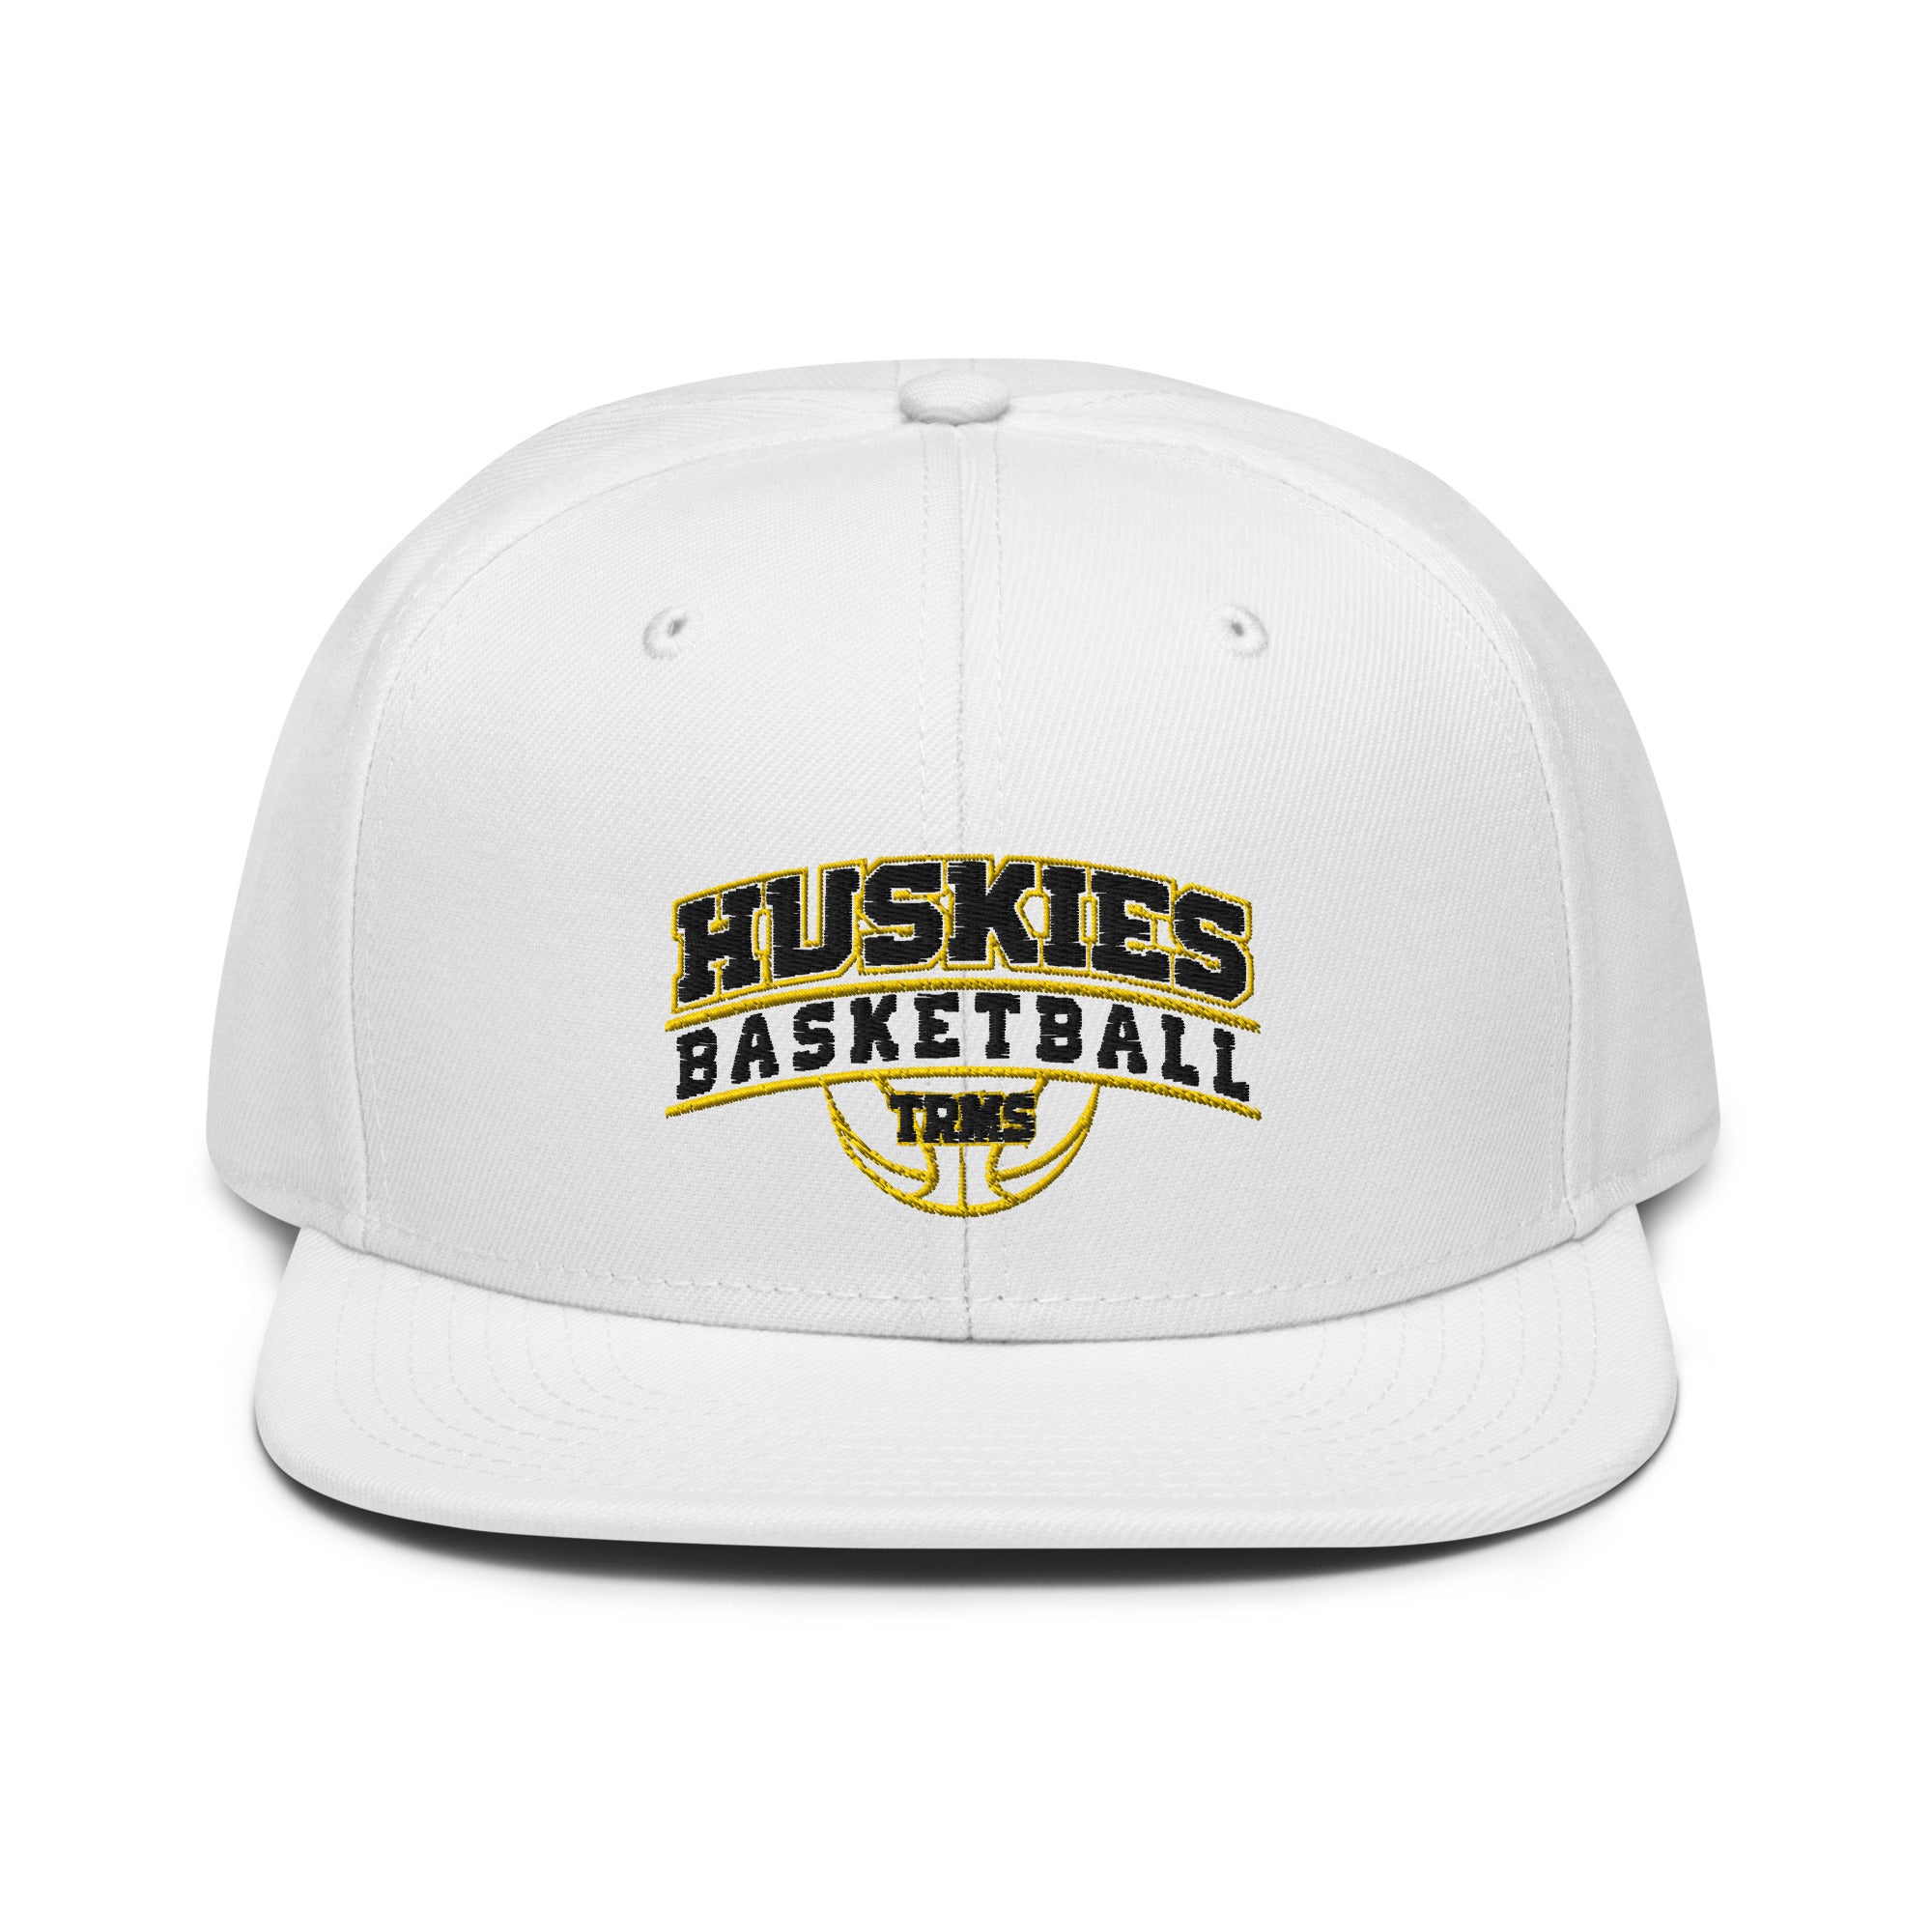 Trail Ridge Middle School Basketball Snapback Hat